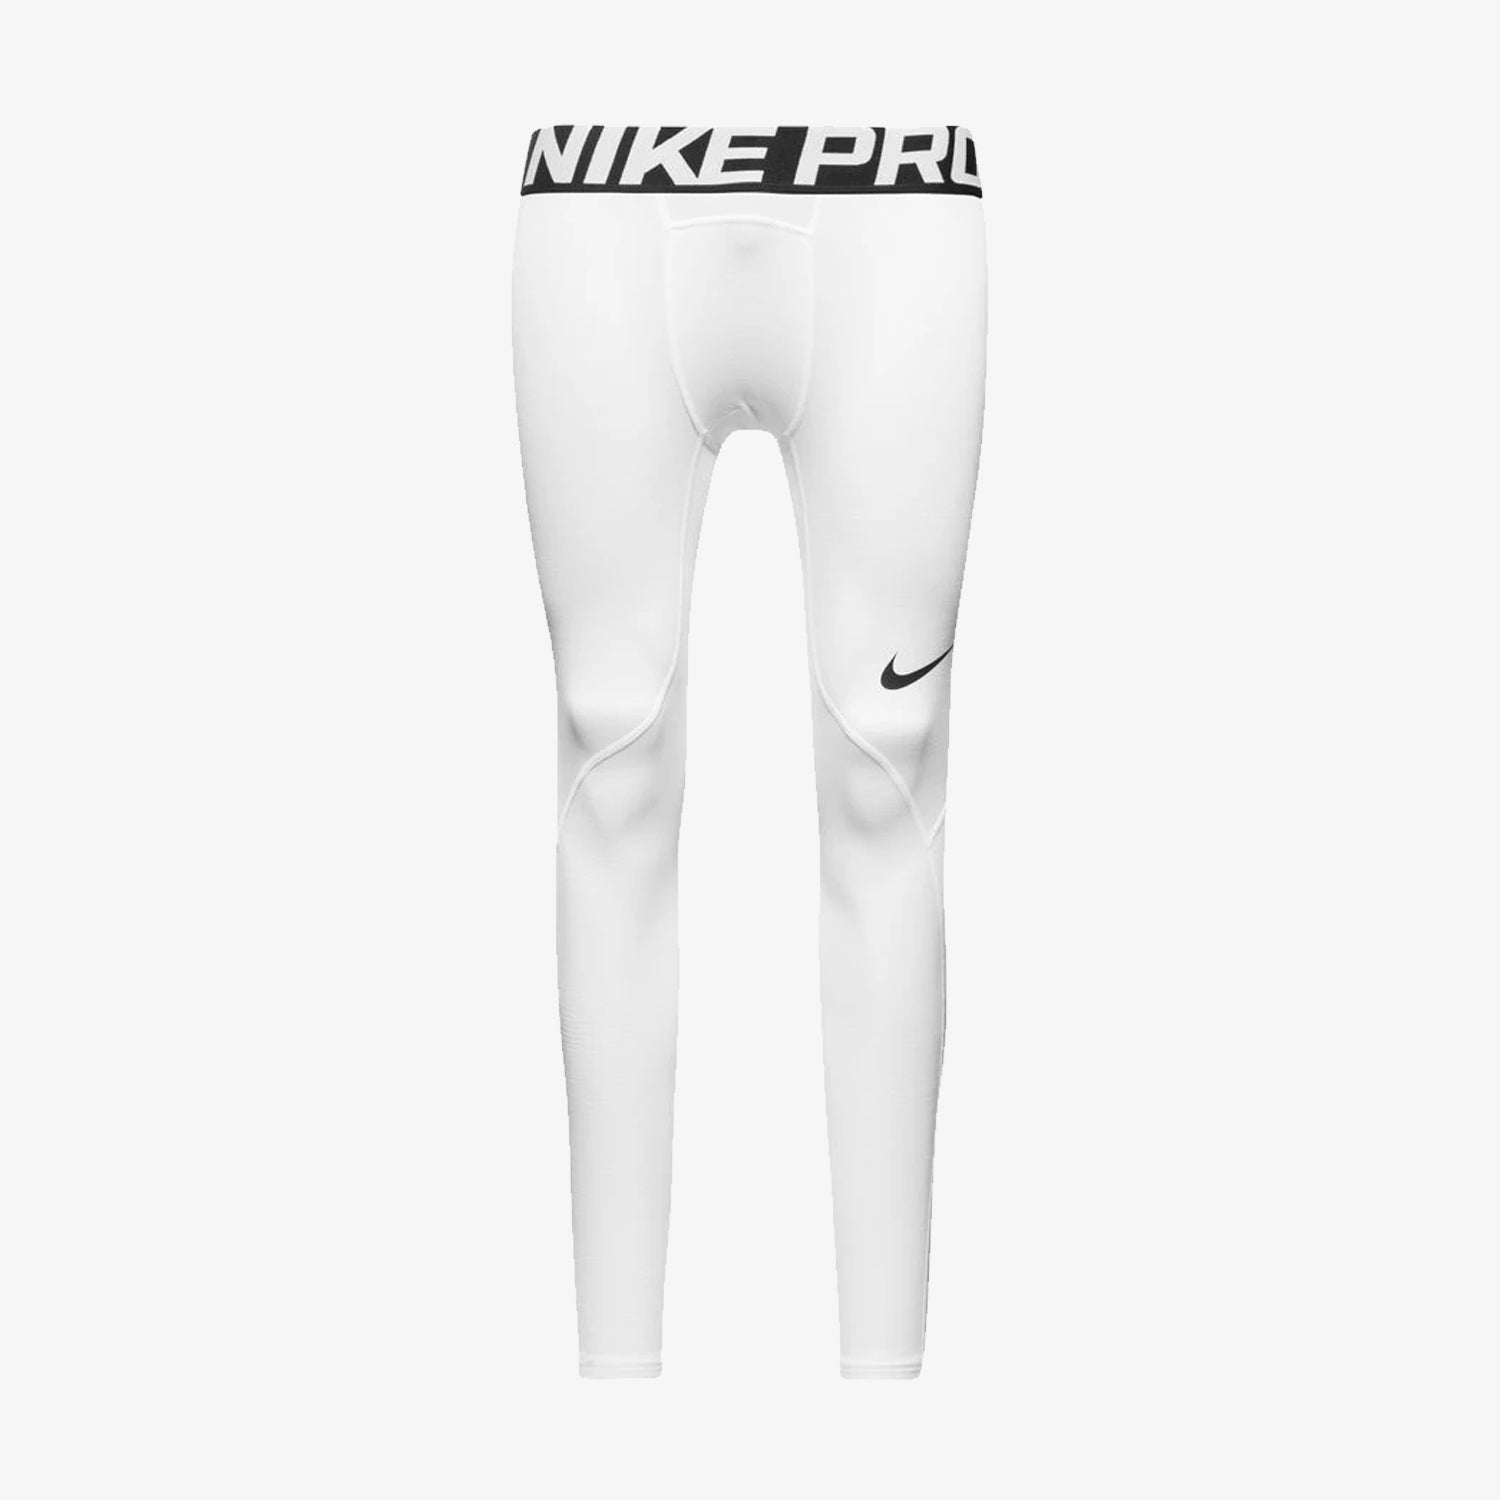 NIKE Nike Pro Warm Men's Tights, Black Men's Athletic Leggings